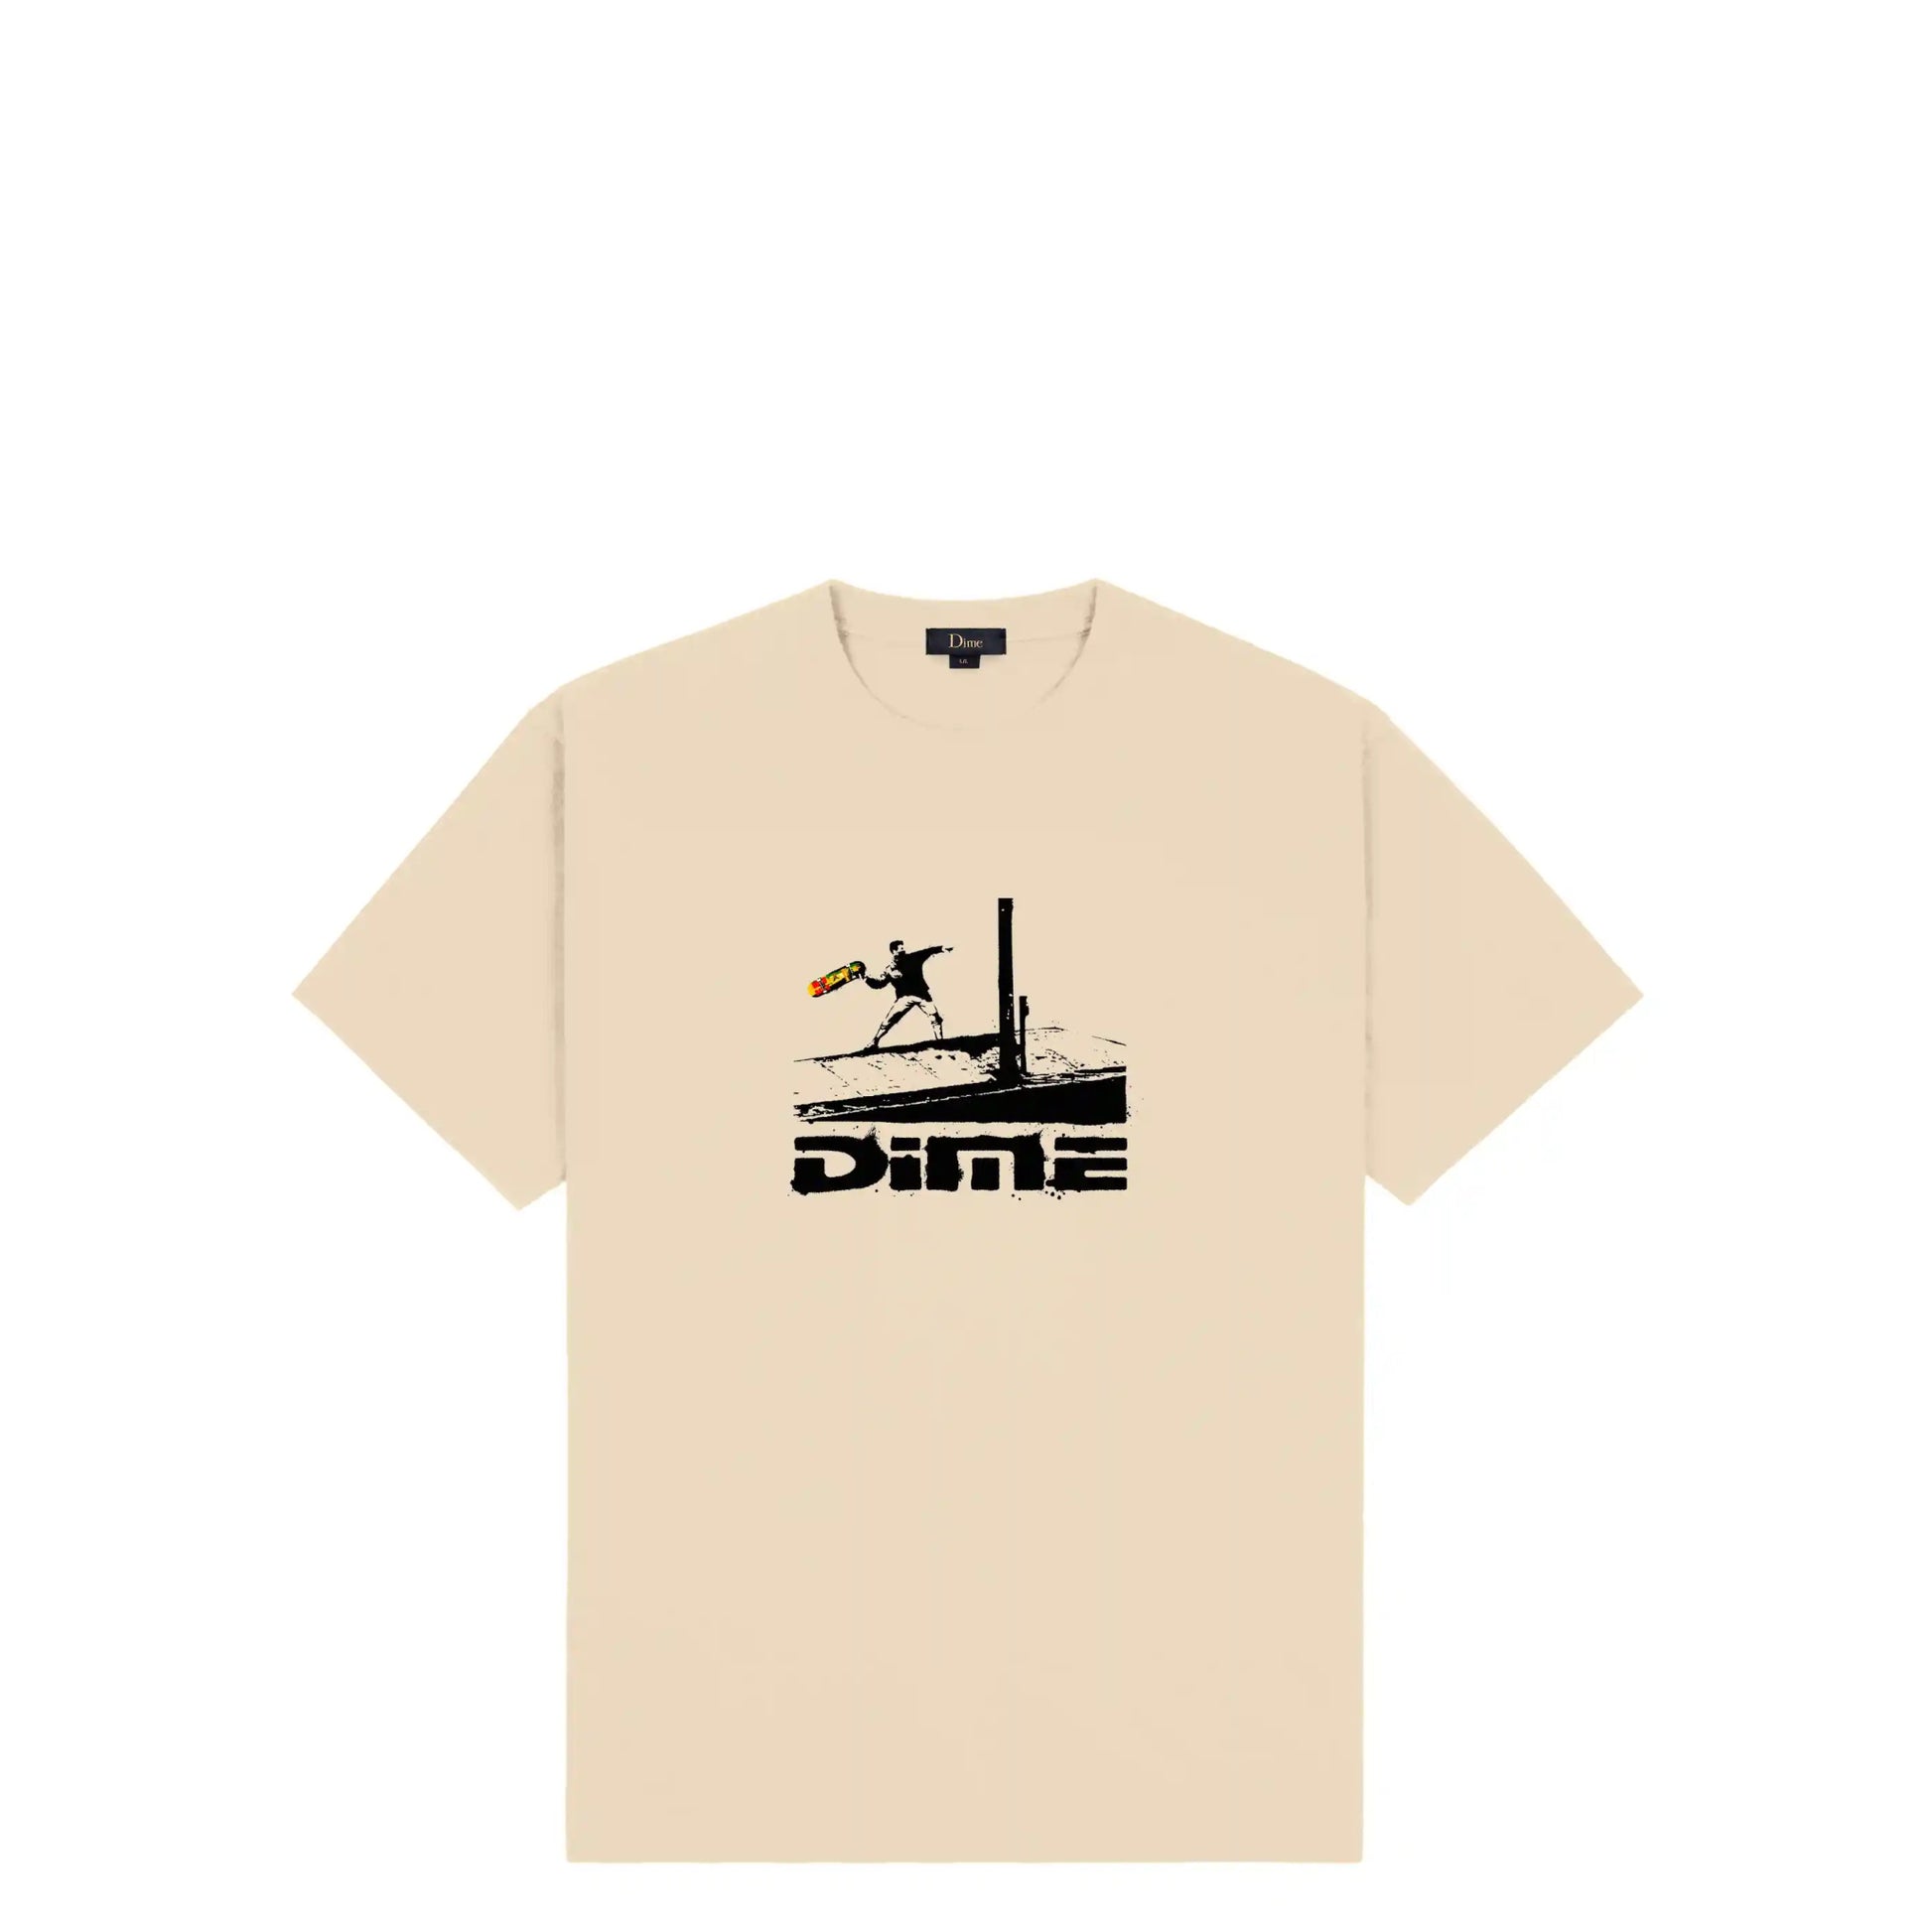 Dime Banky T-Shirt, fog - Tiki Room Skateboards - 1